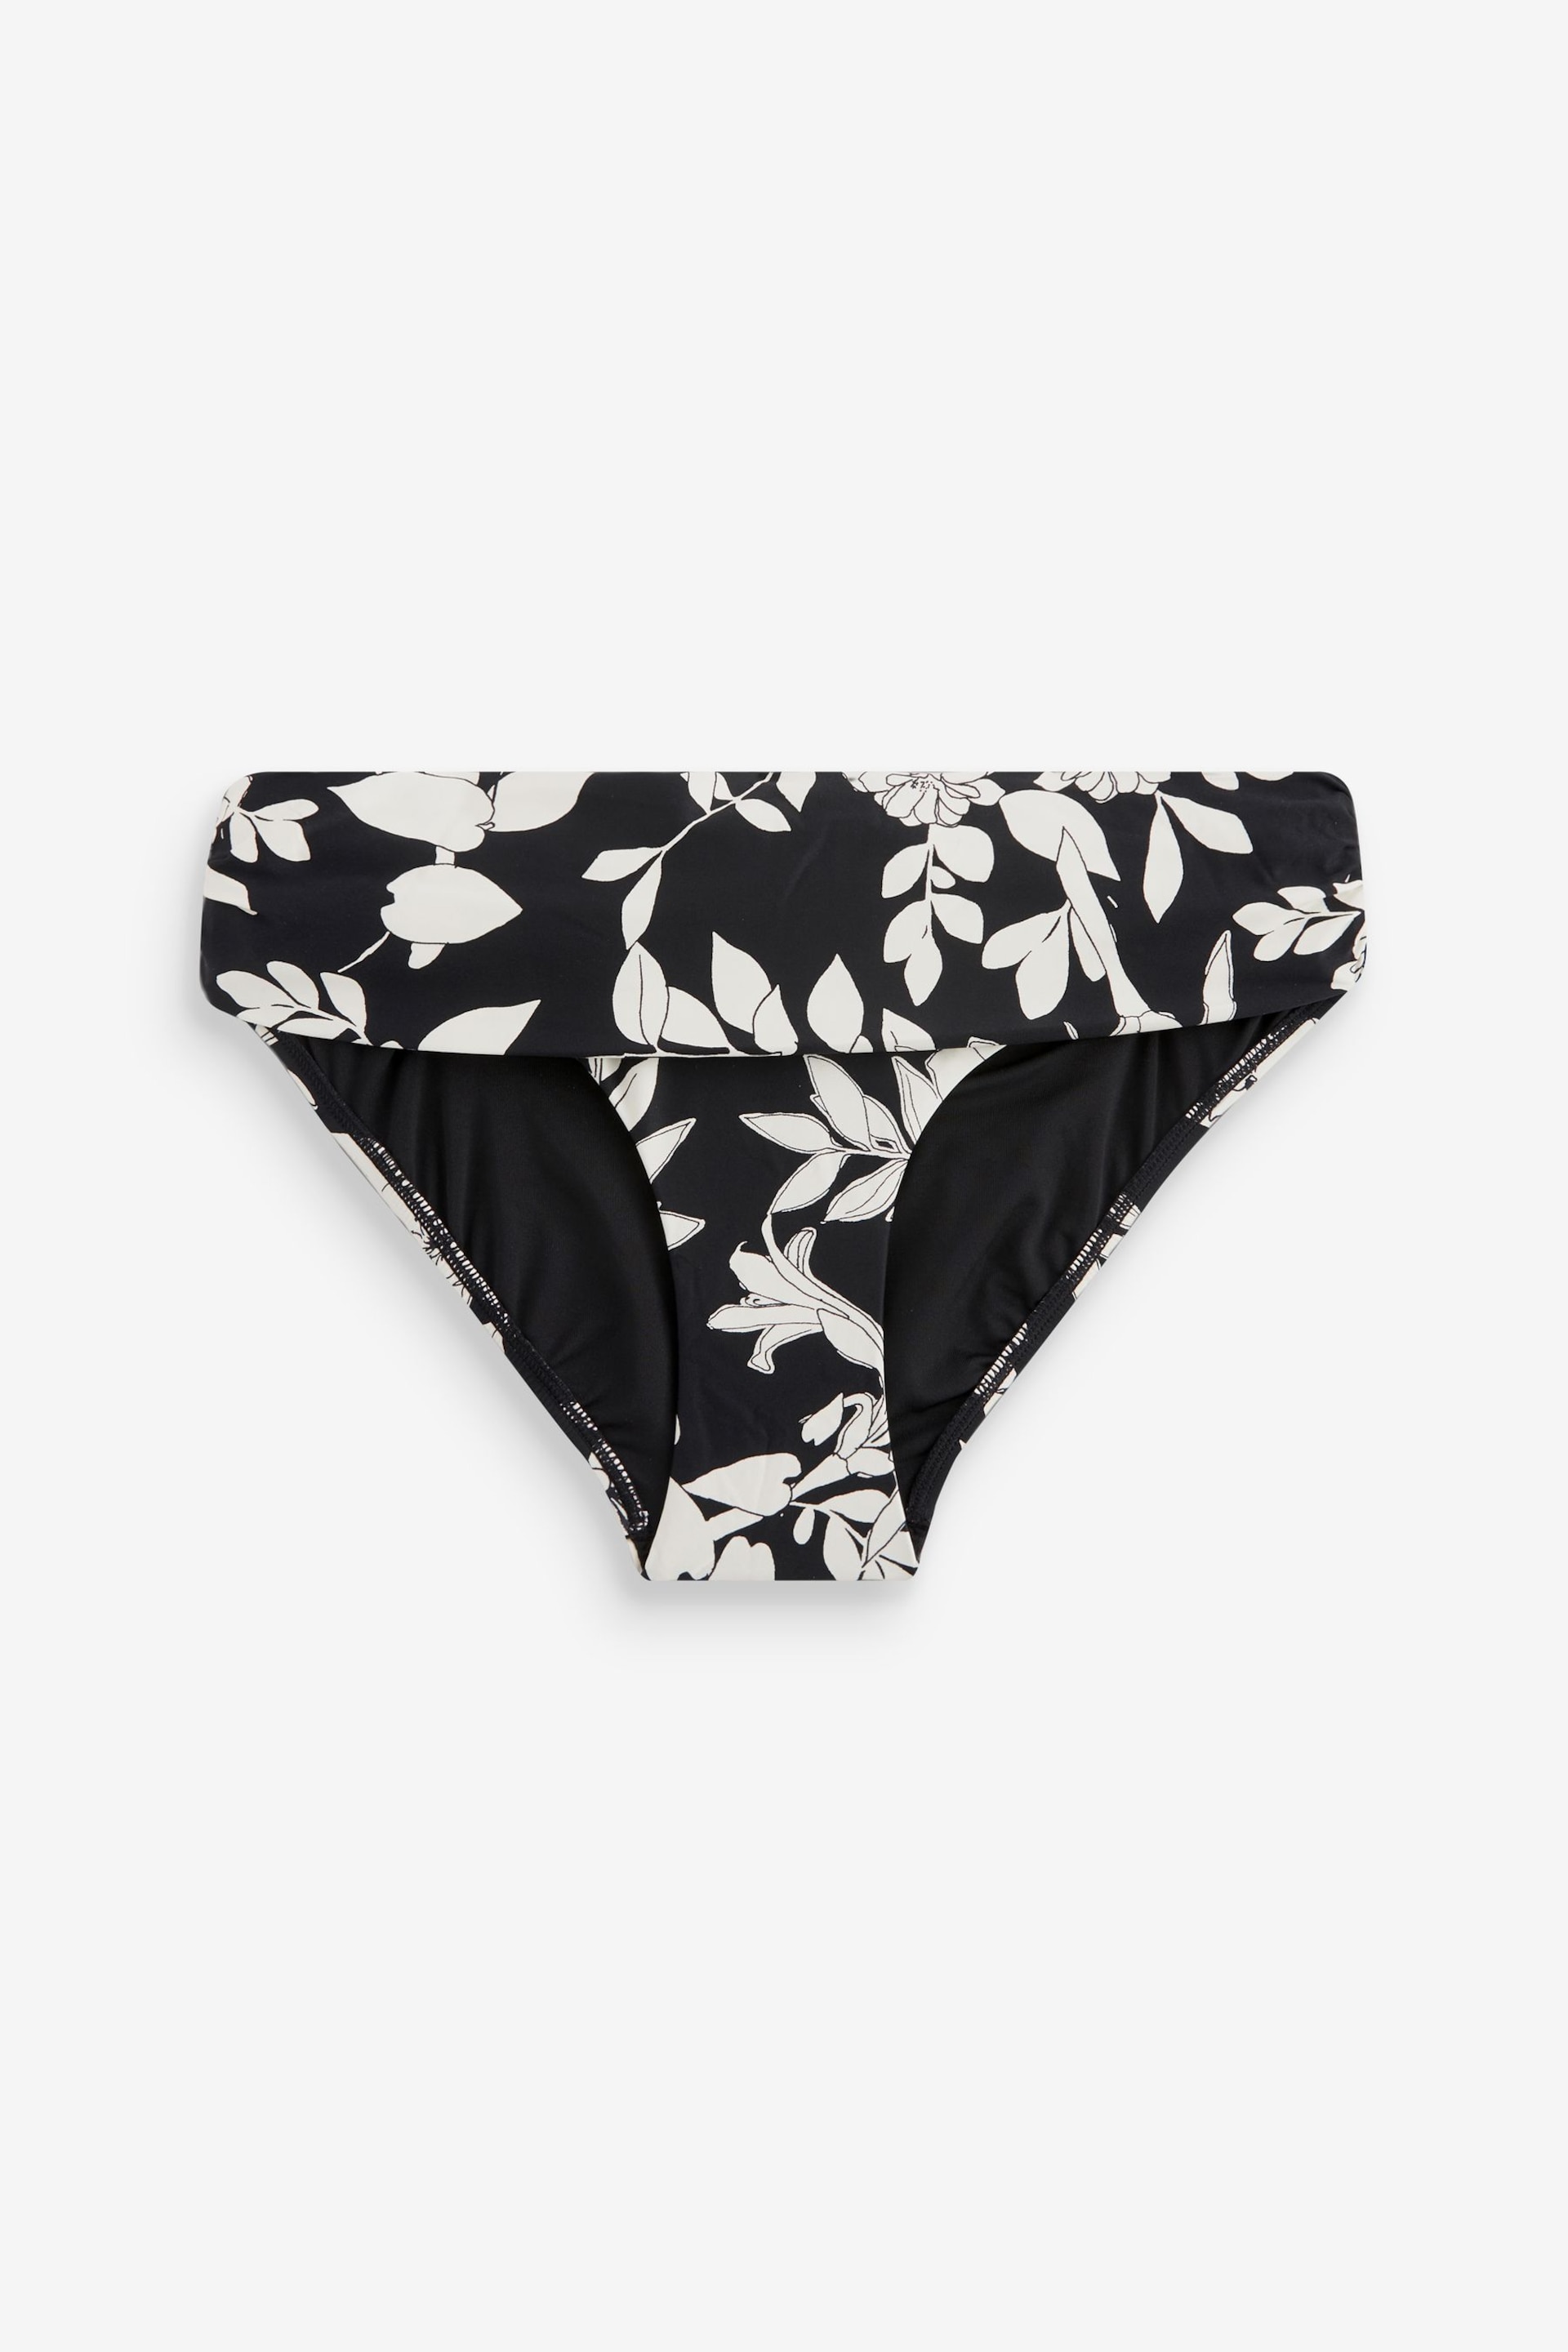 Myleene Klass Roll Top Black/Ecru Floral Bikini Bottoms - Image 4 of 4